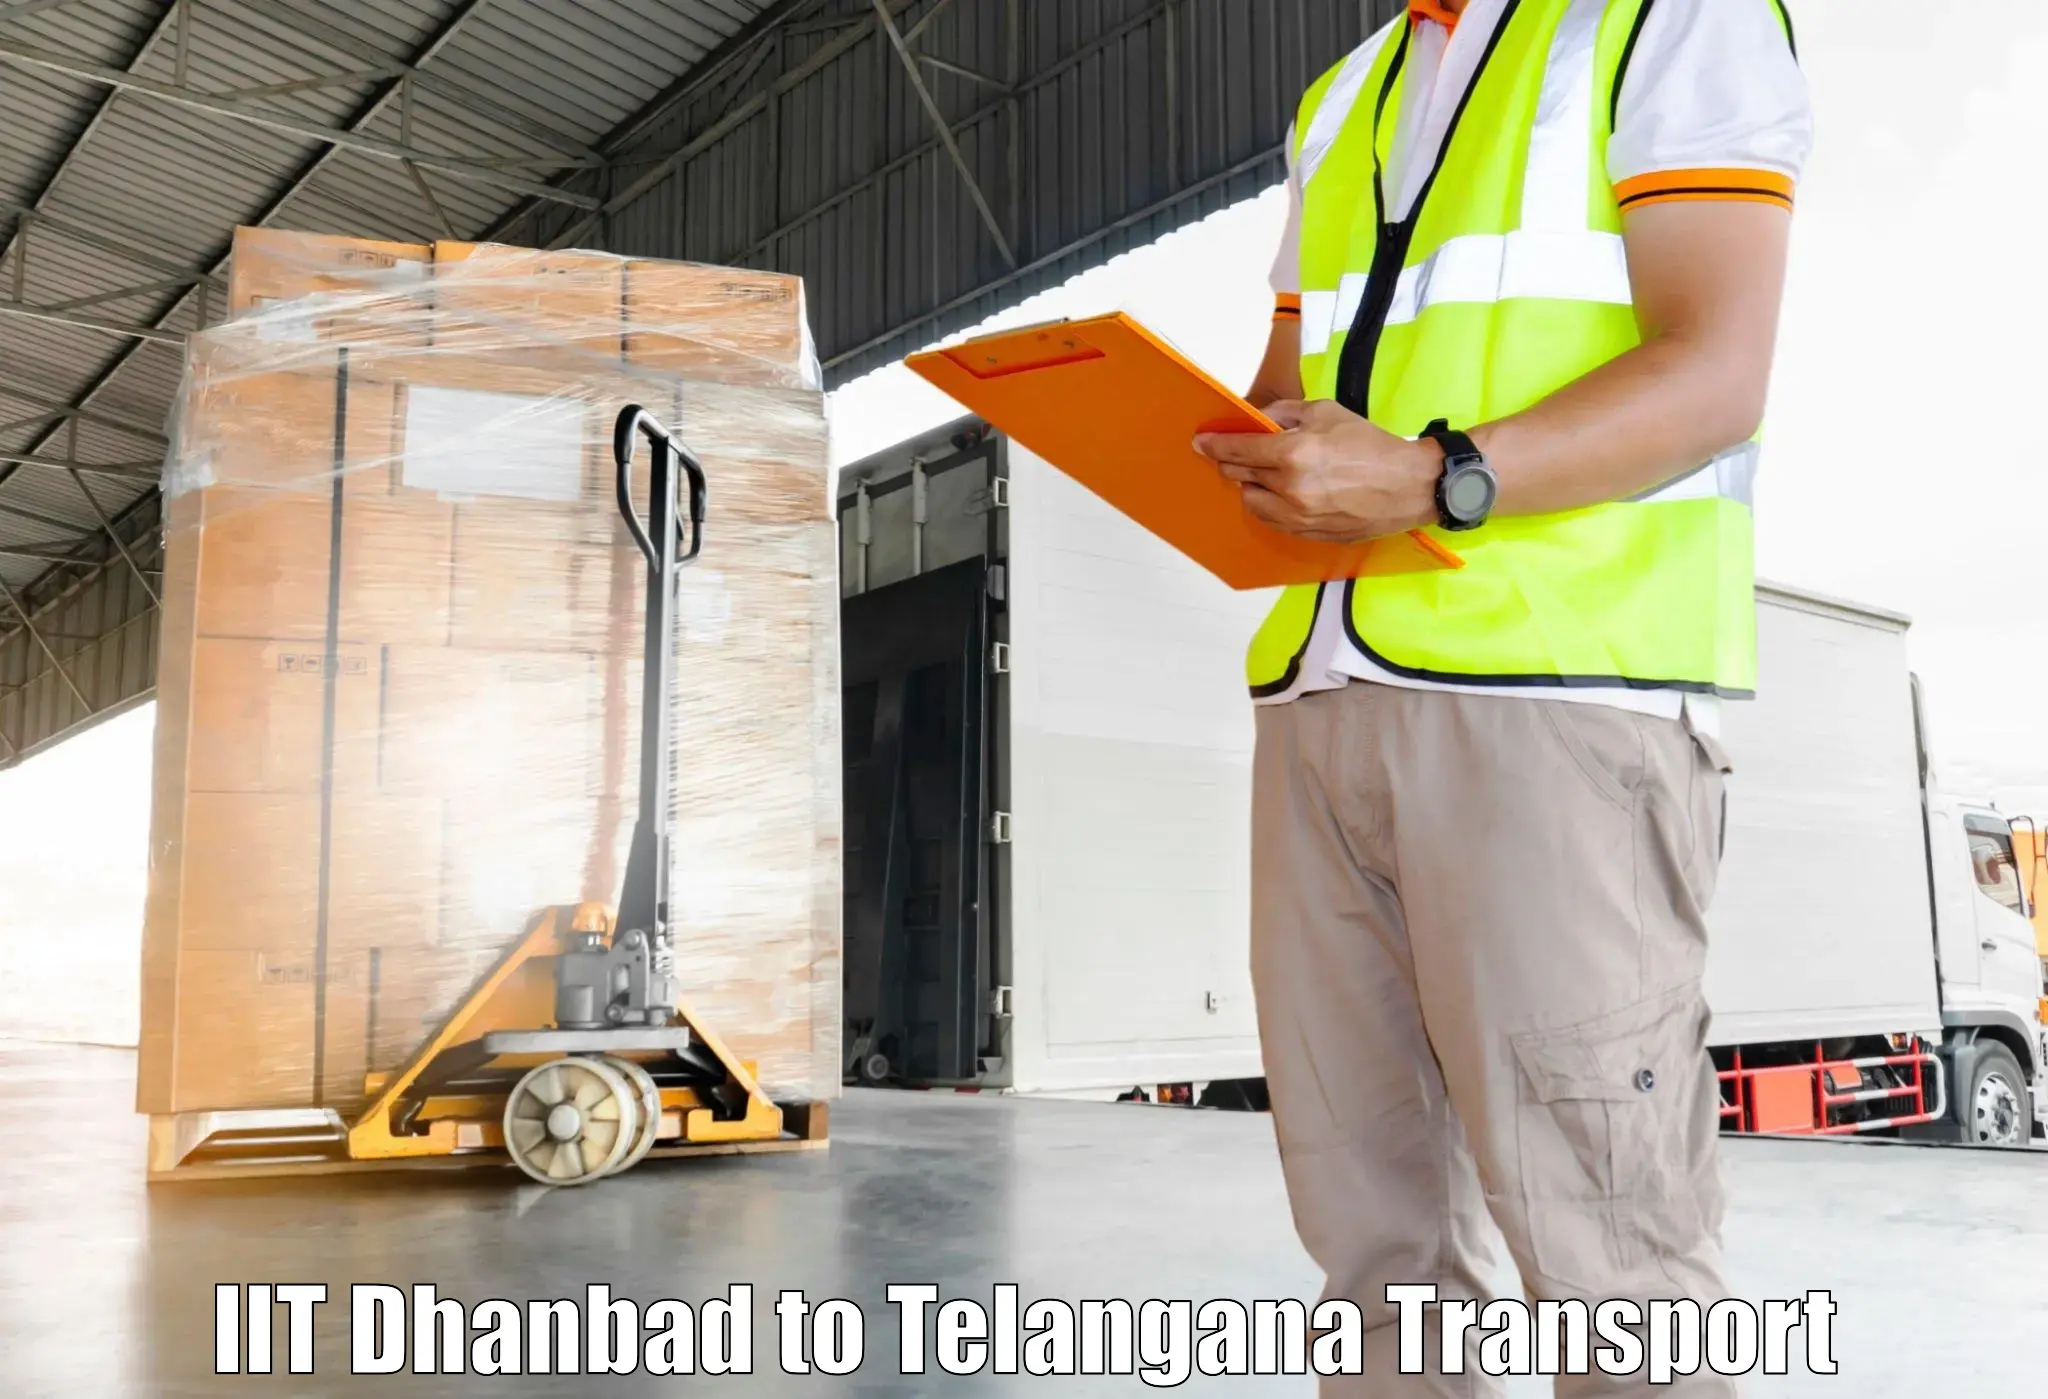 Shipping partner IIT Dhanbad to Kothagudem